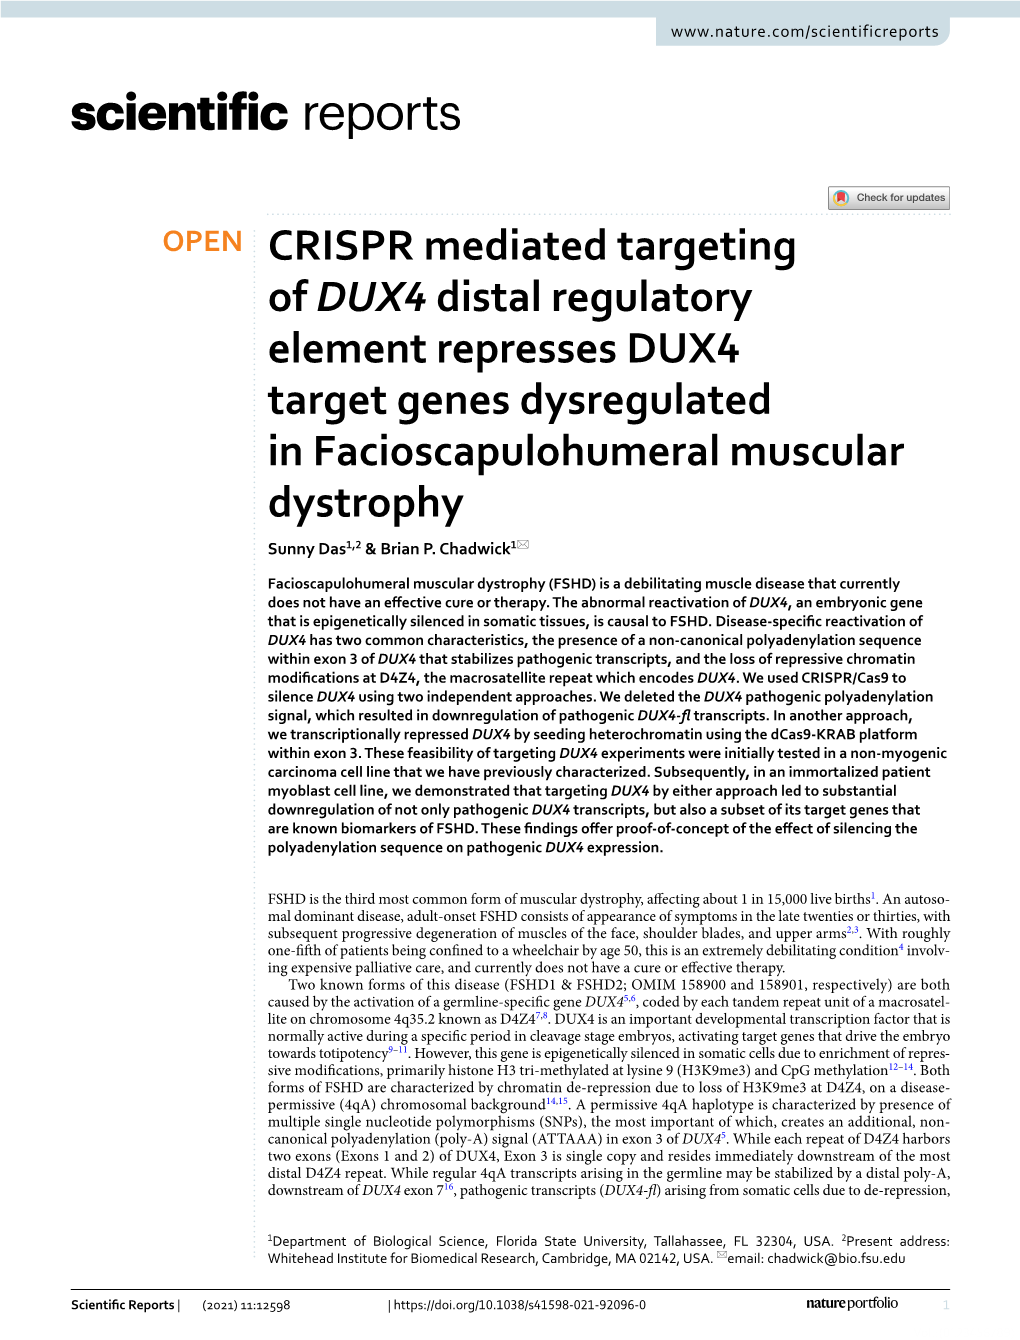 CRISPR Mediated Targeting of DUX4 Distal Regulatory Element Represses DUX4 Target Genes Dysregulated in Facioscapulohumeral Muscular Dystrophy Sunny Das1,2 & Brian P